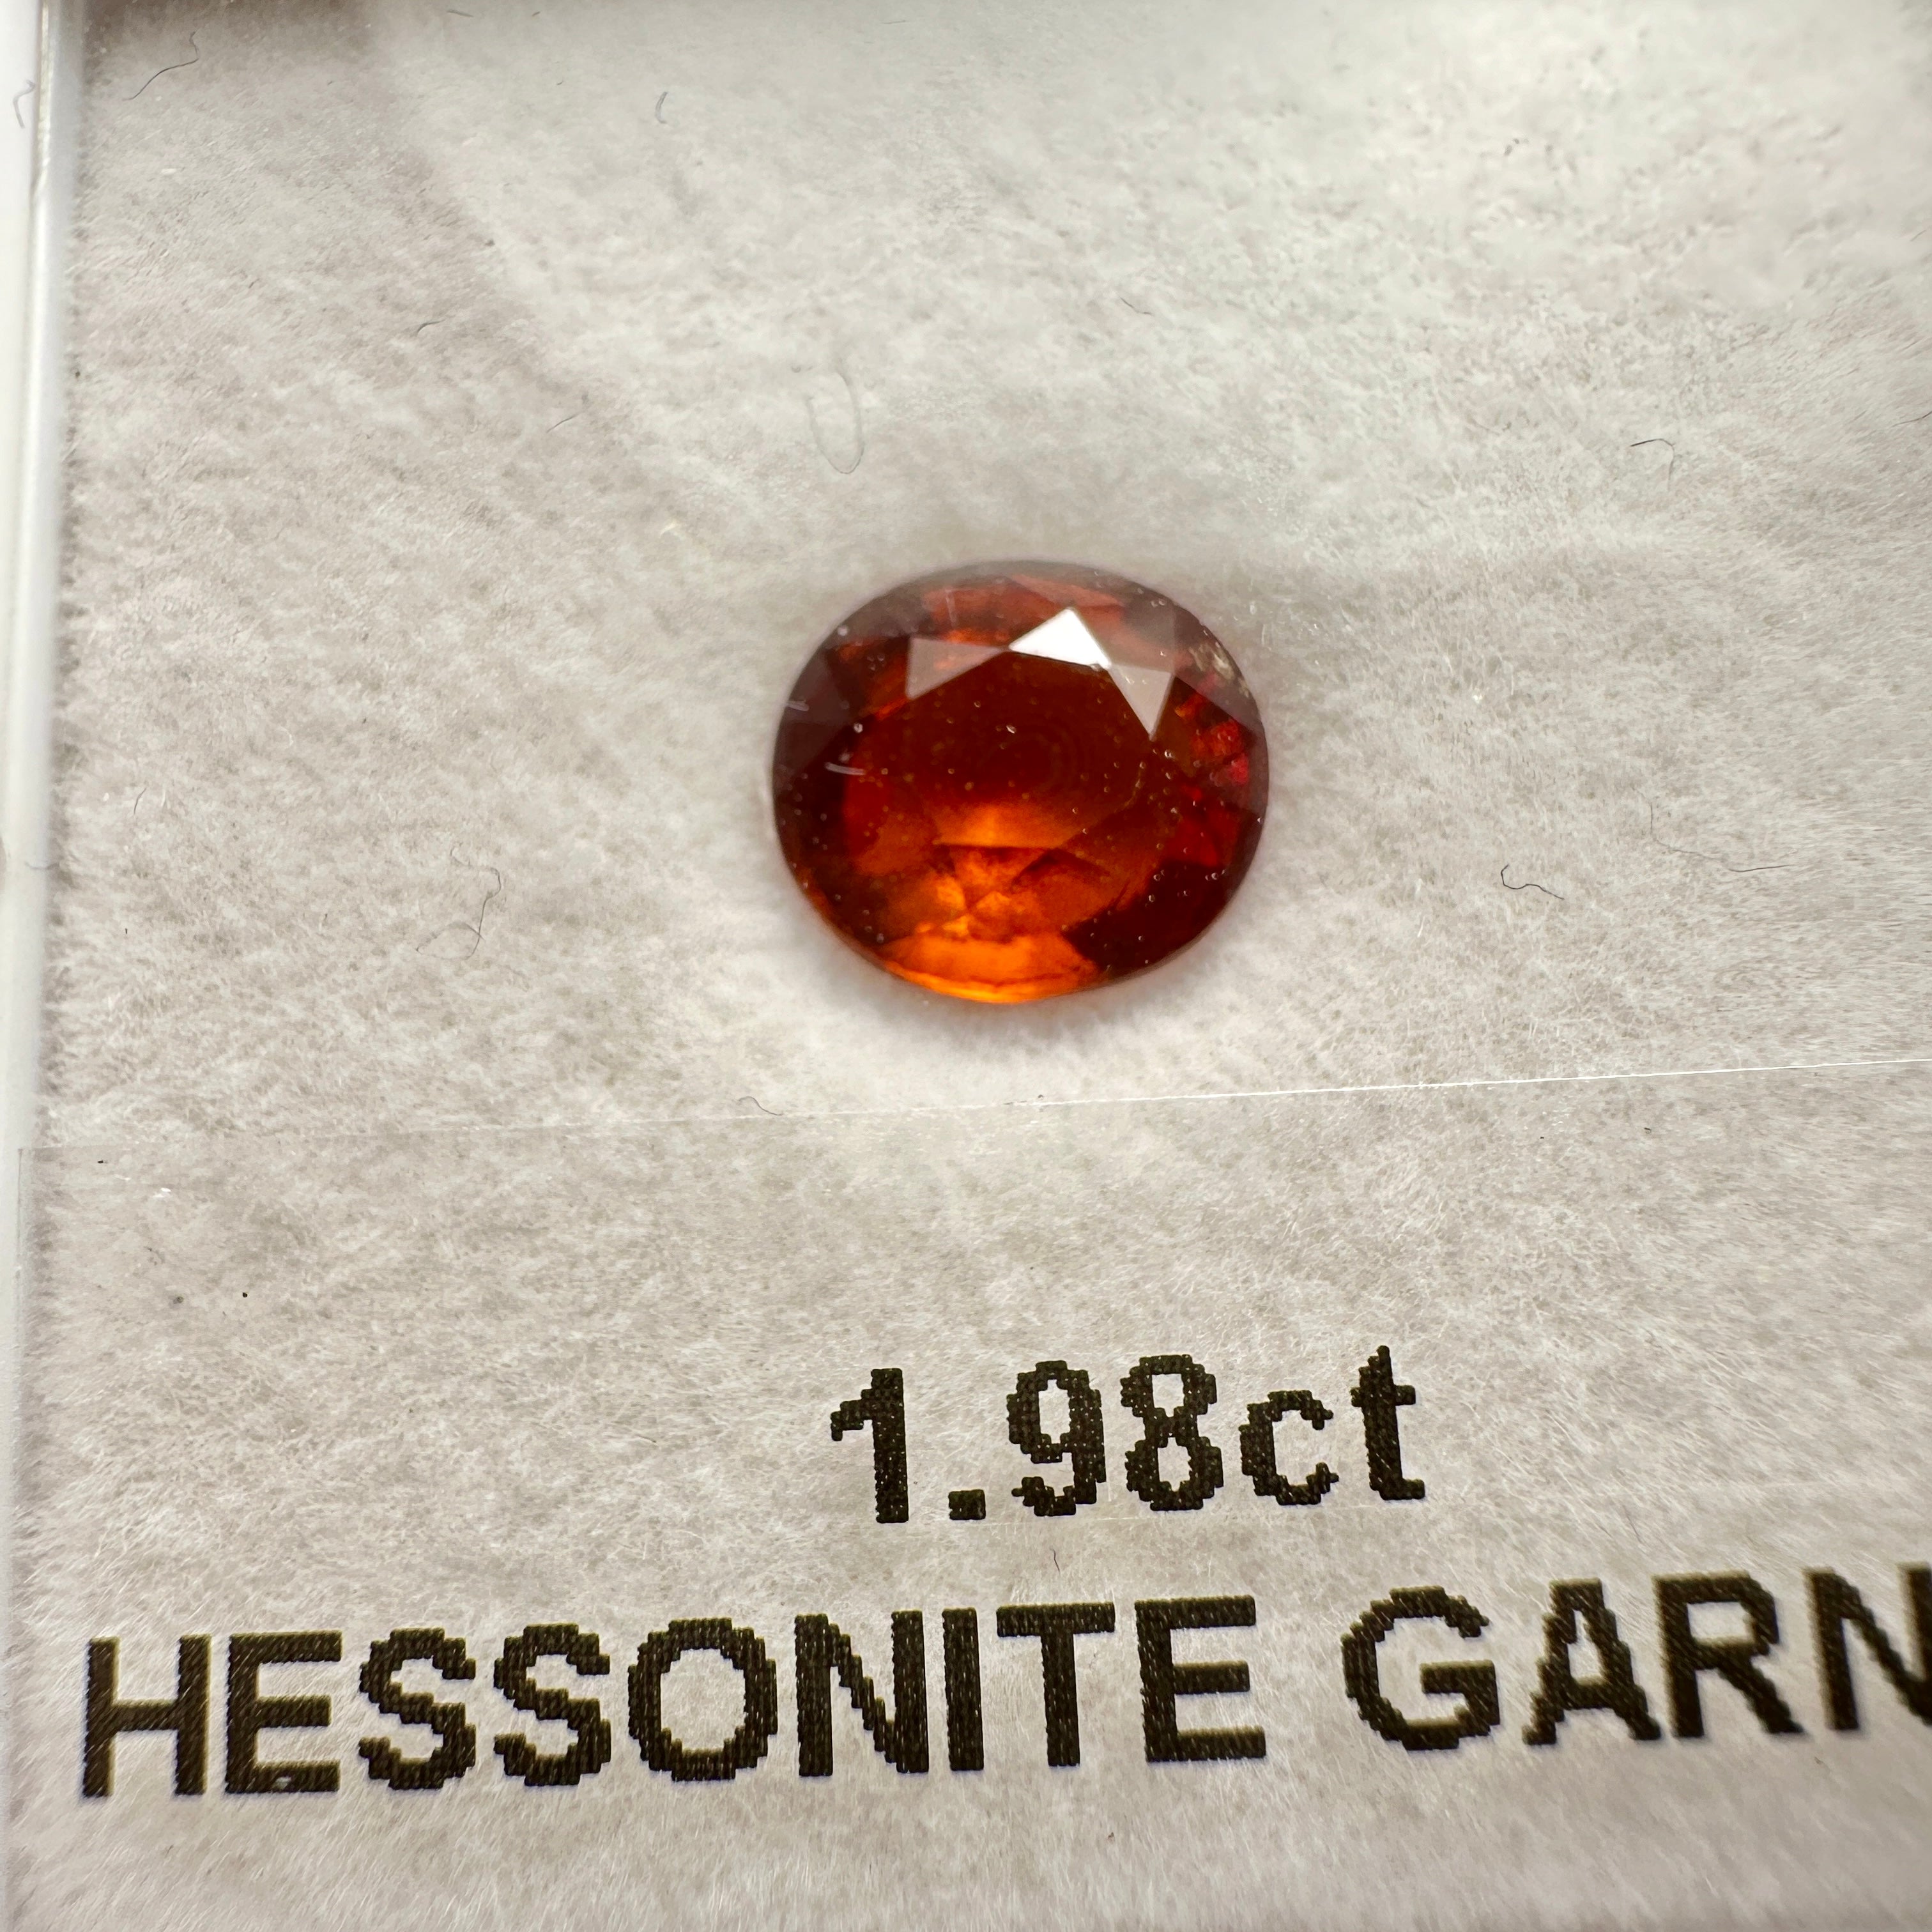 1.98ct Hessonite Garnet, Untreated Unheated, native cut